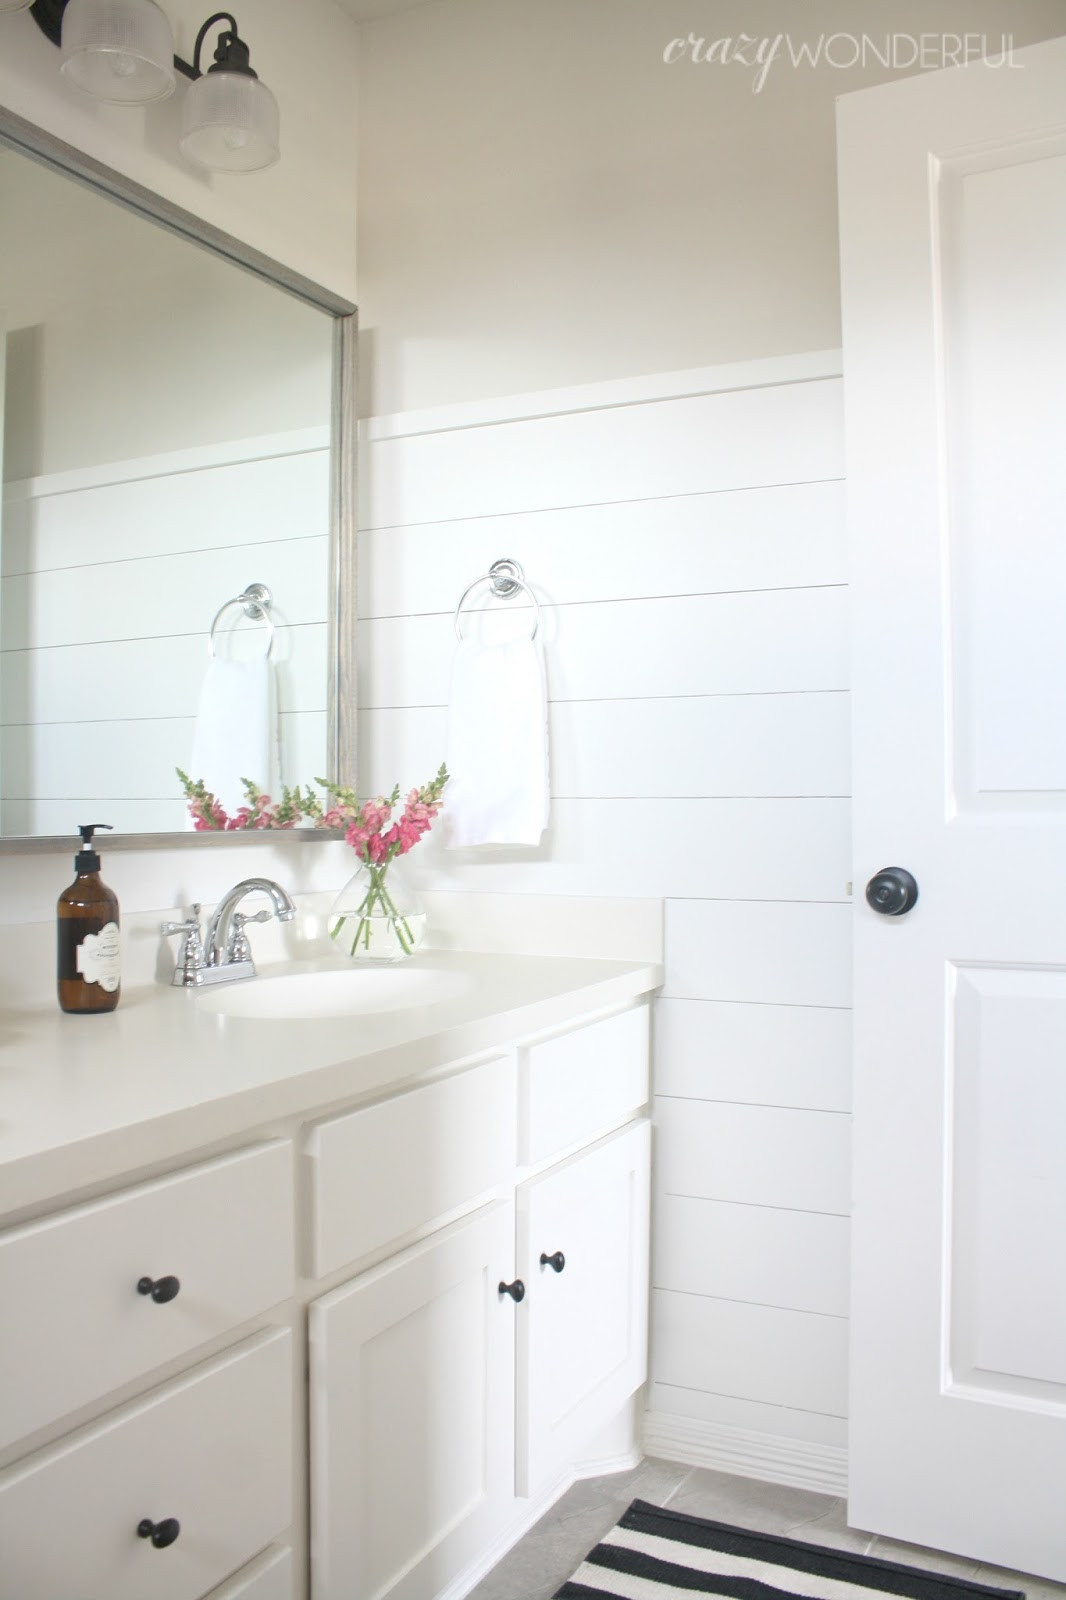 Best ideas about Shiplap Bathroom DIY
. Save or Pin shiplap girl s bathroom reveal Crazy Wonderful Now.